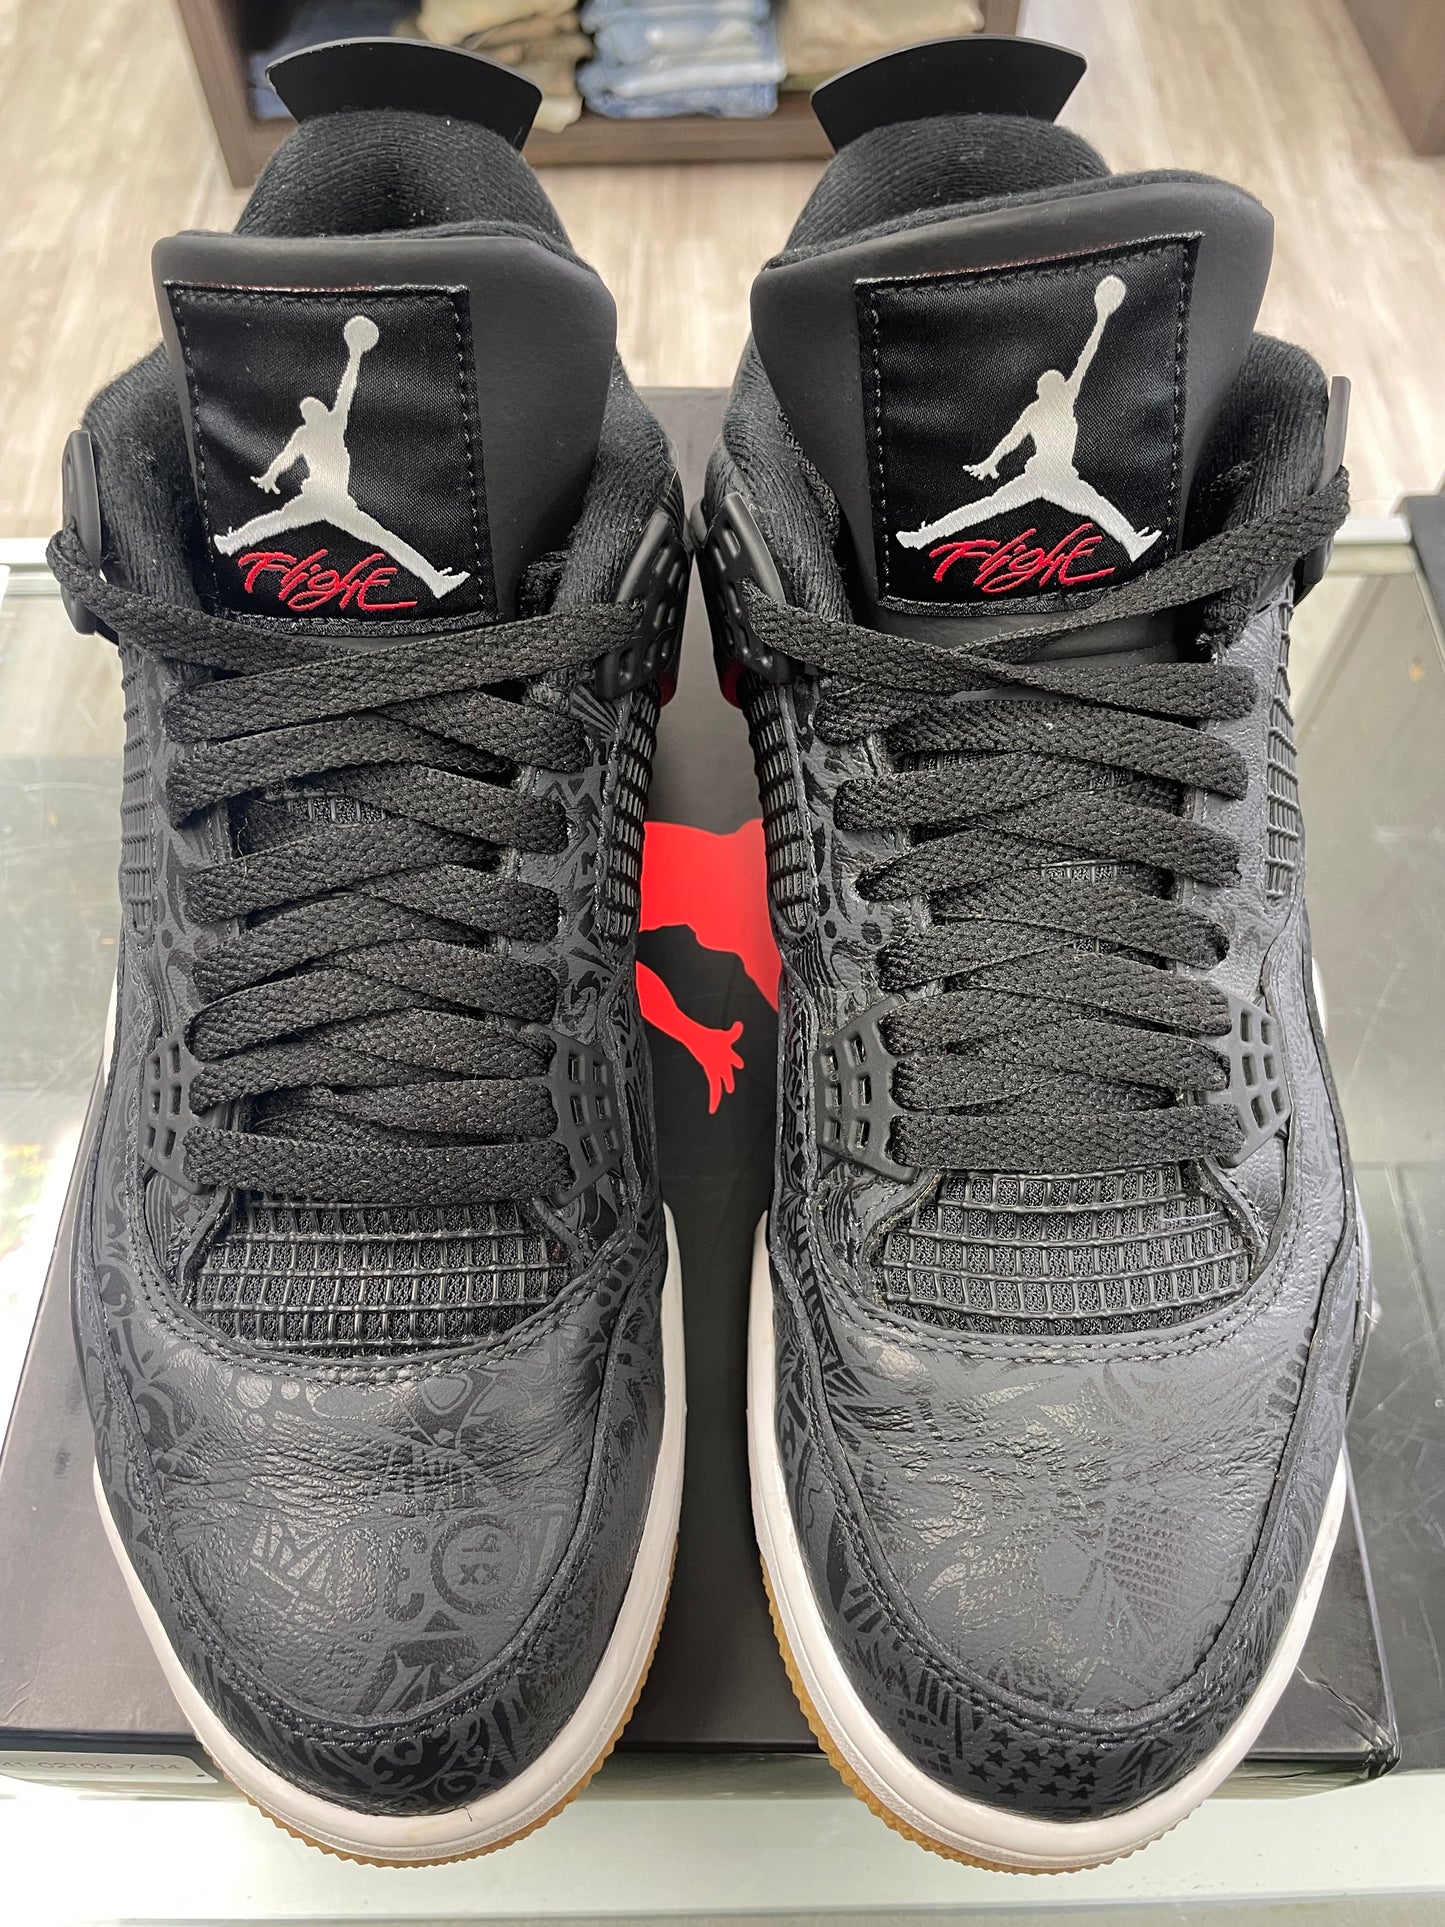 Air Jordan Retro 4 "Laser Black Gum" *Size 10 Preowned*